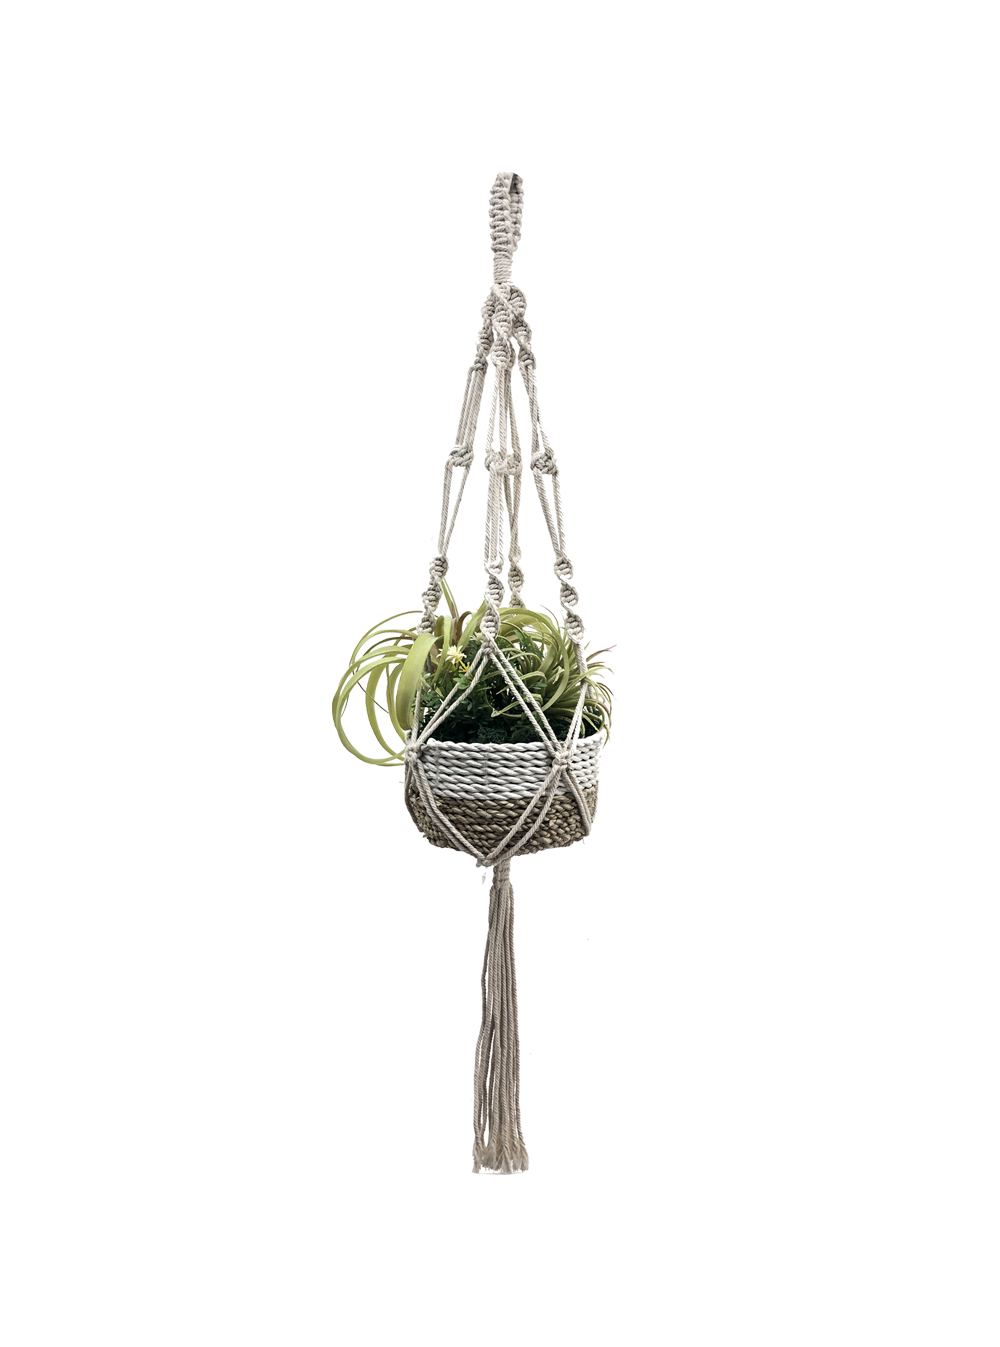 Macrame Hanging Planter with Tillandsia in Basket with Tassel